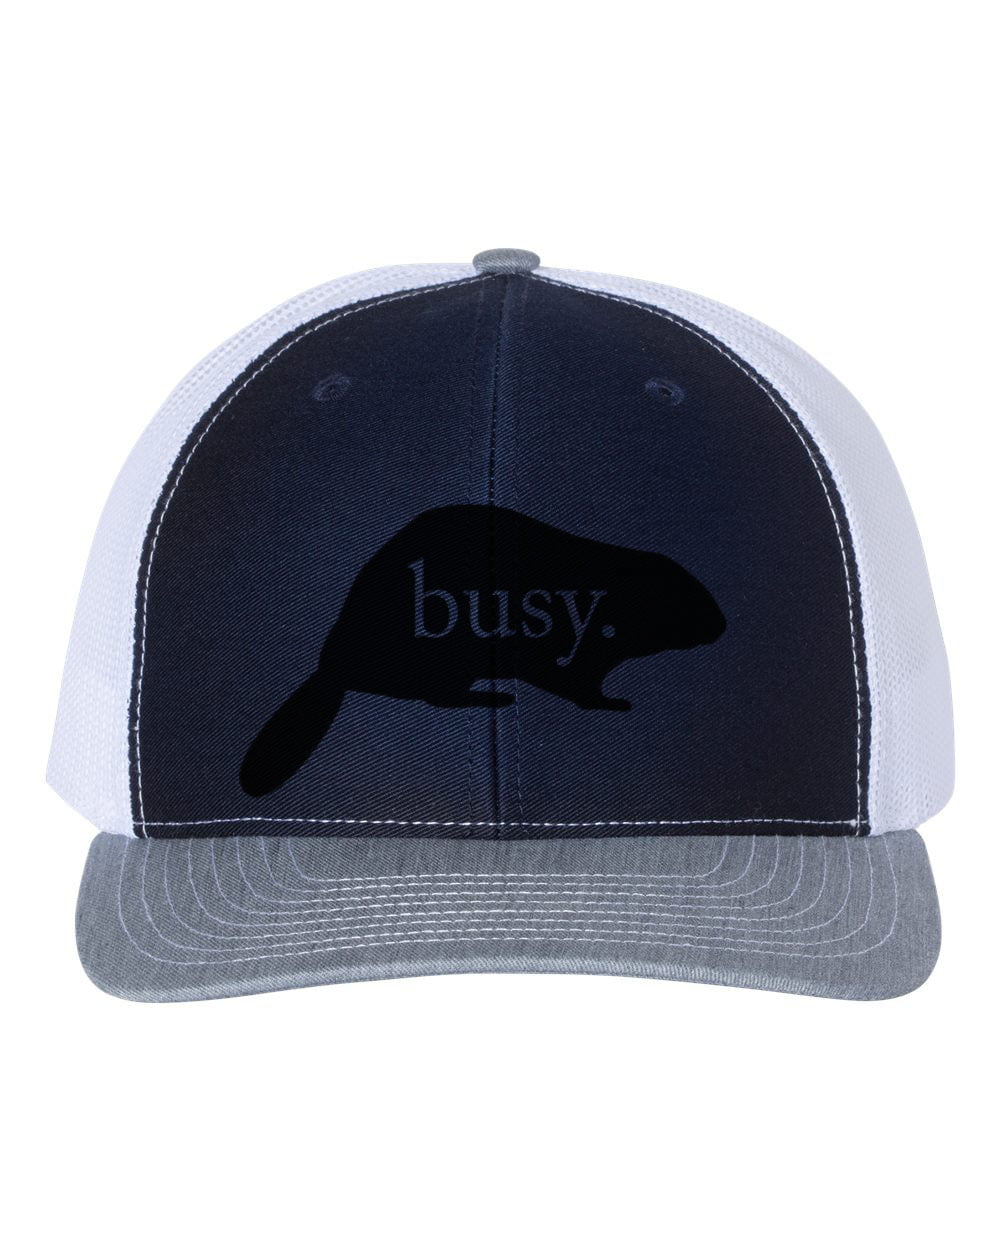 Busy Bee Mesh Baseball Caps Girls Adjustable Trucker Hat Black